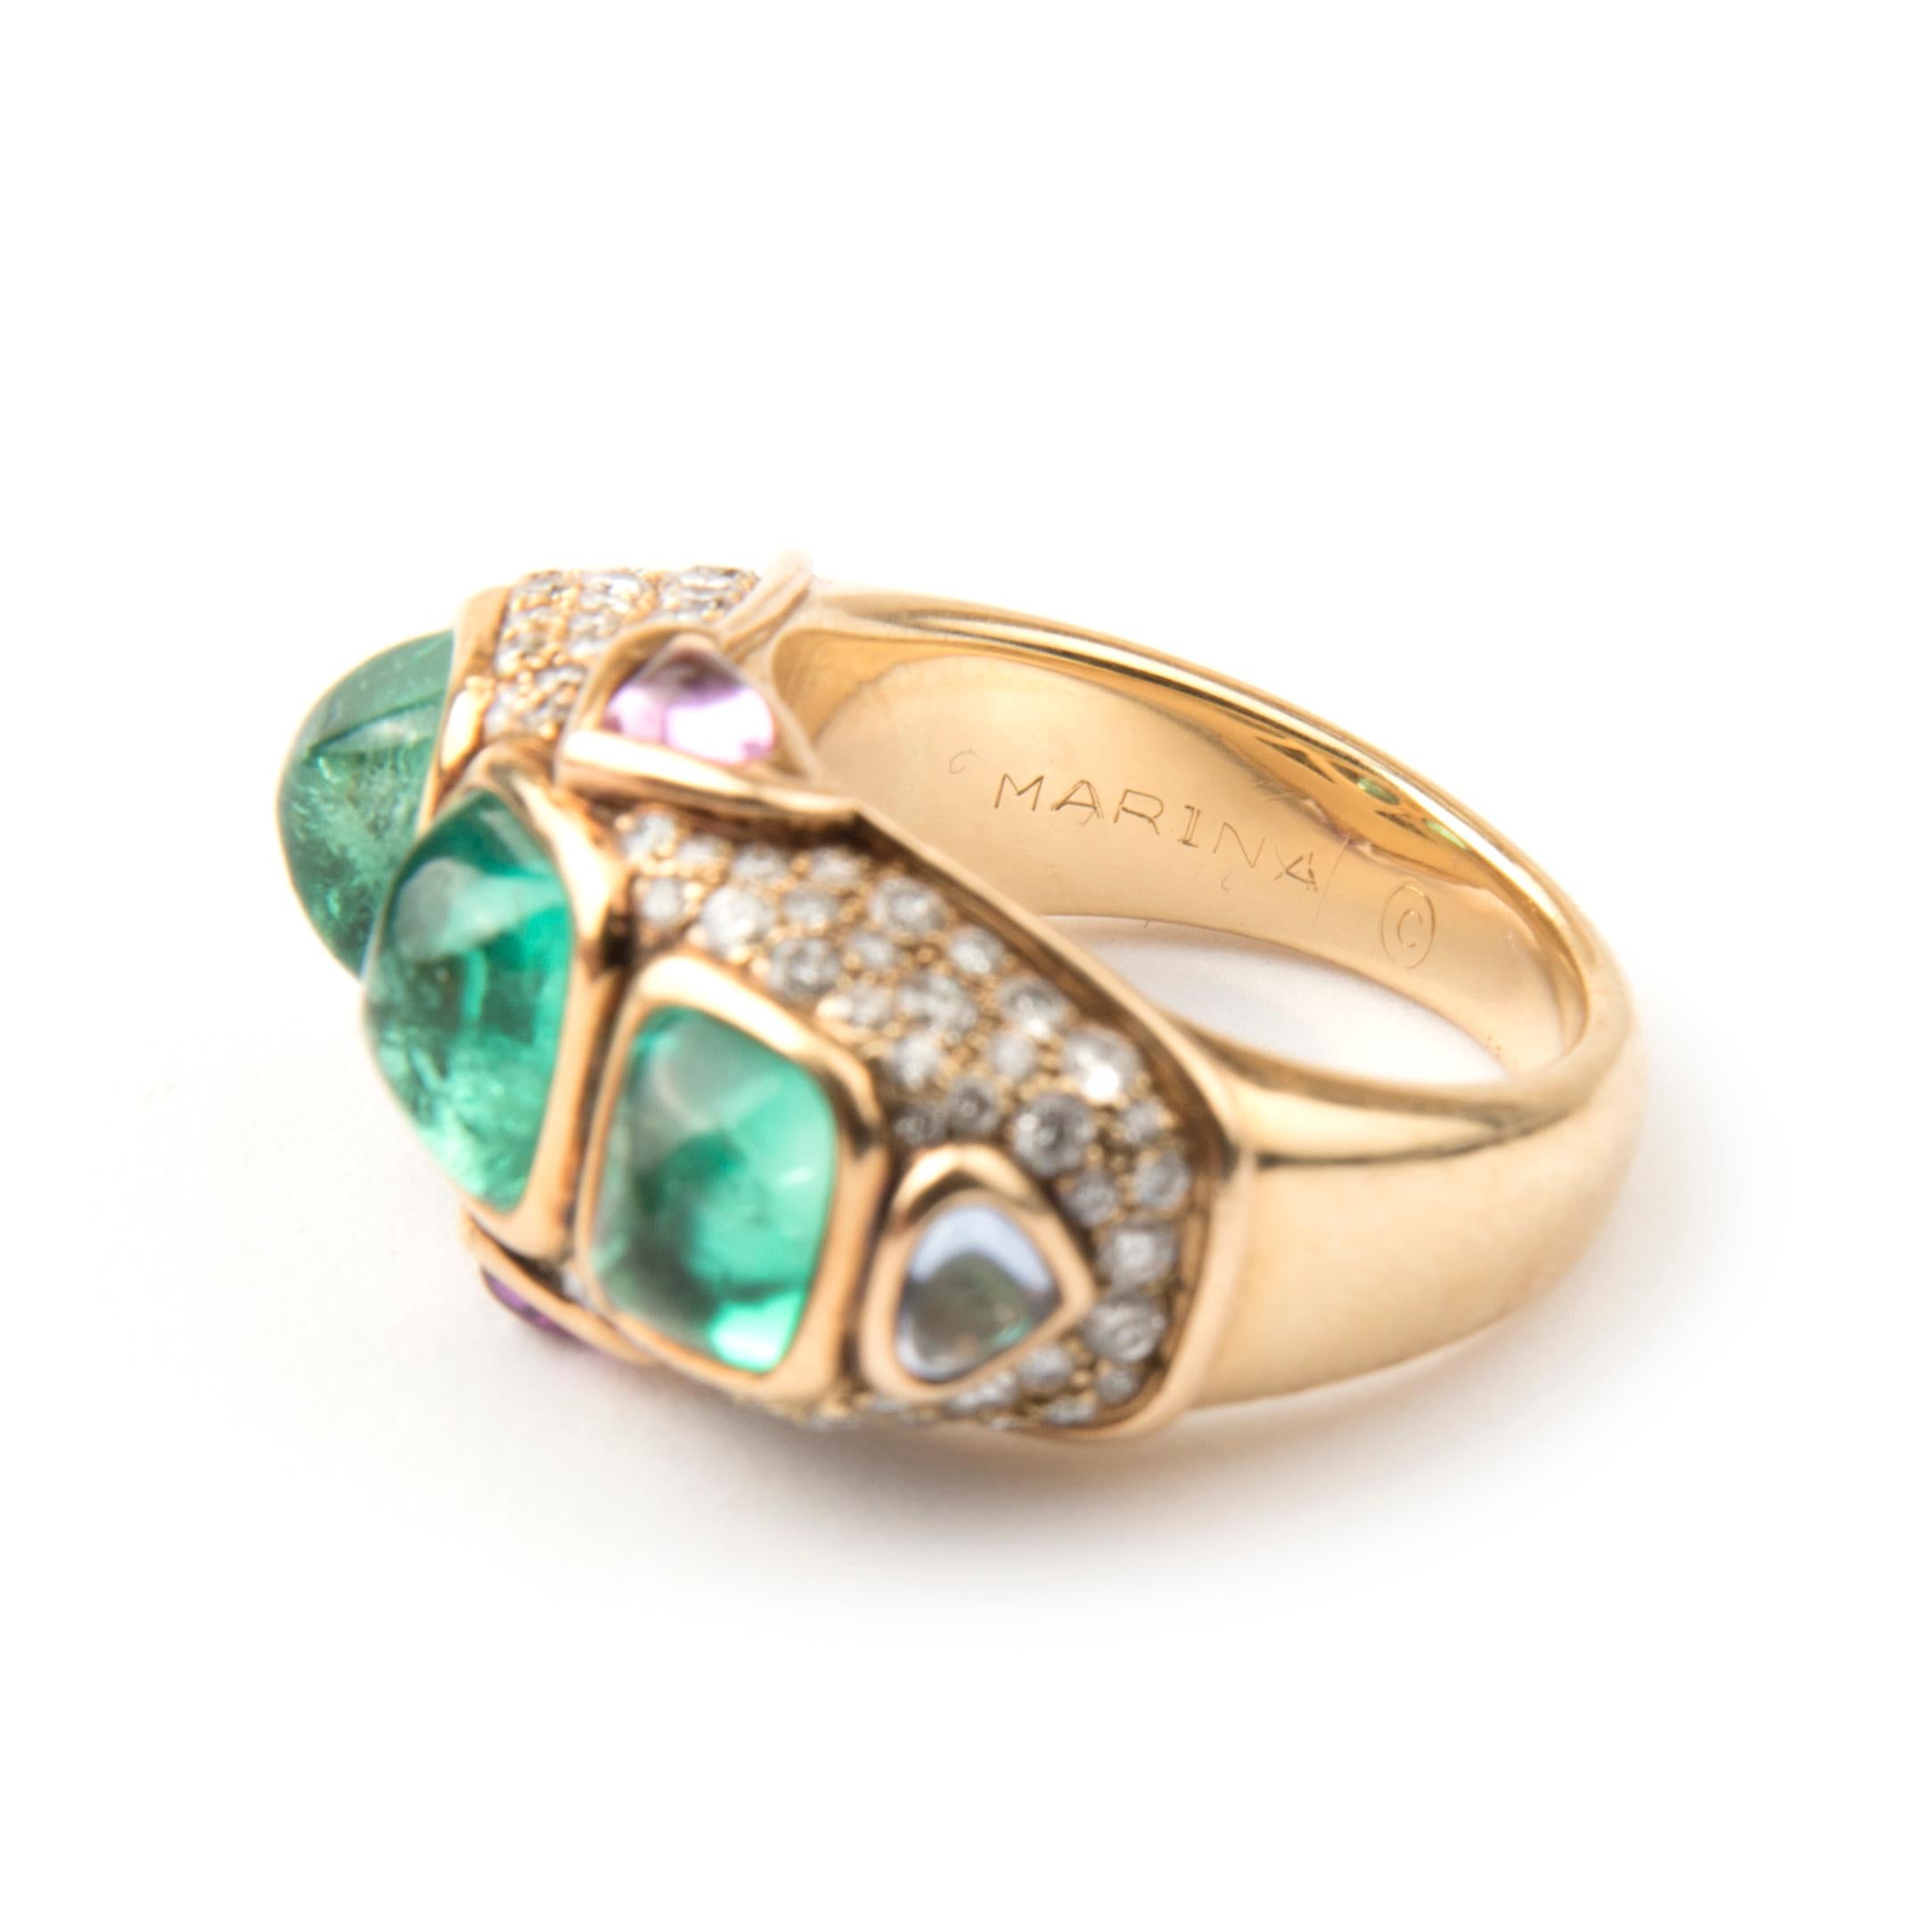 Marina B 'Bulgari' 18 Karat Yellow Gold and Diamond and Emerald Ring, Unique For Sale 1